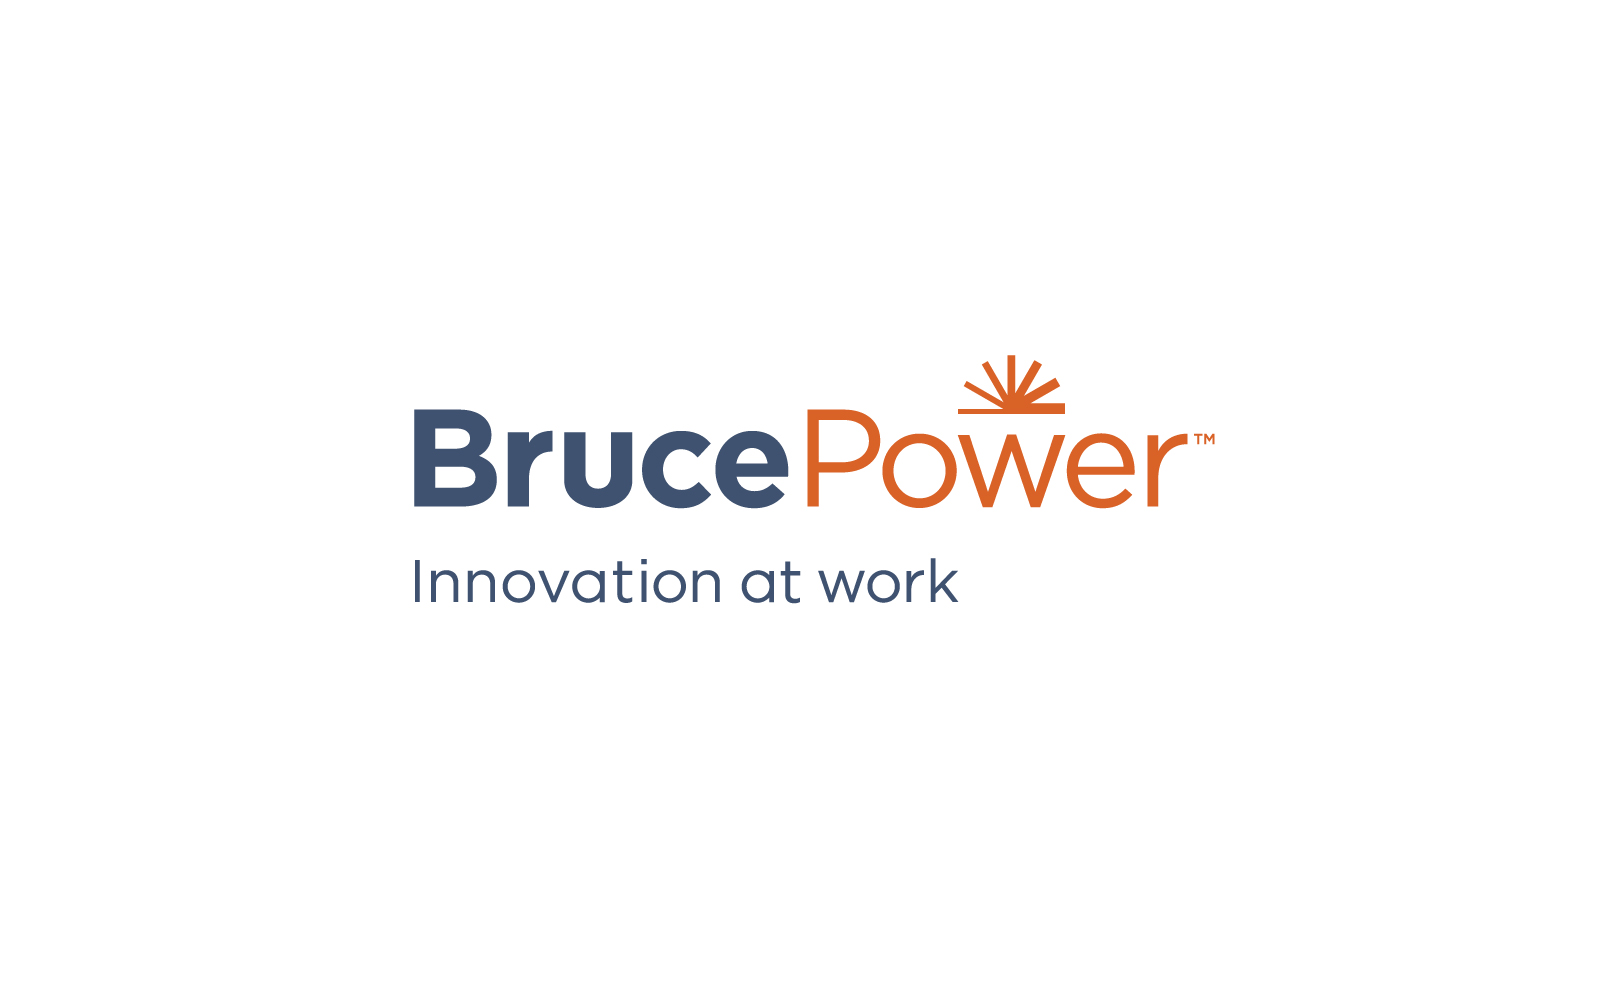 bruce power receives esg rating